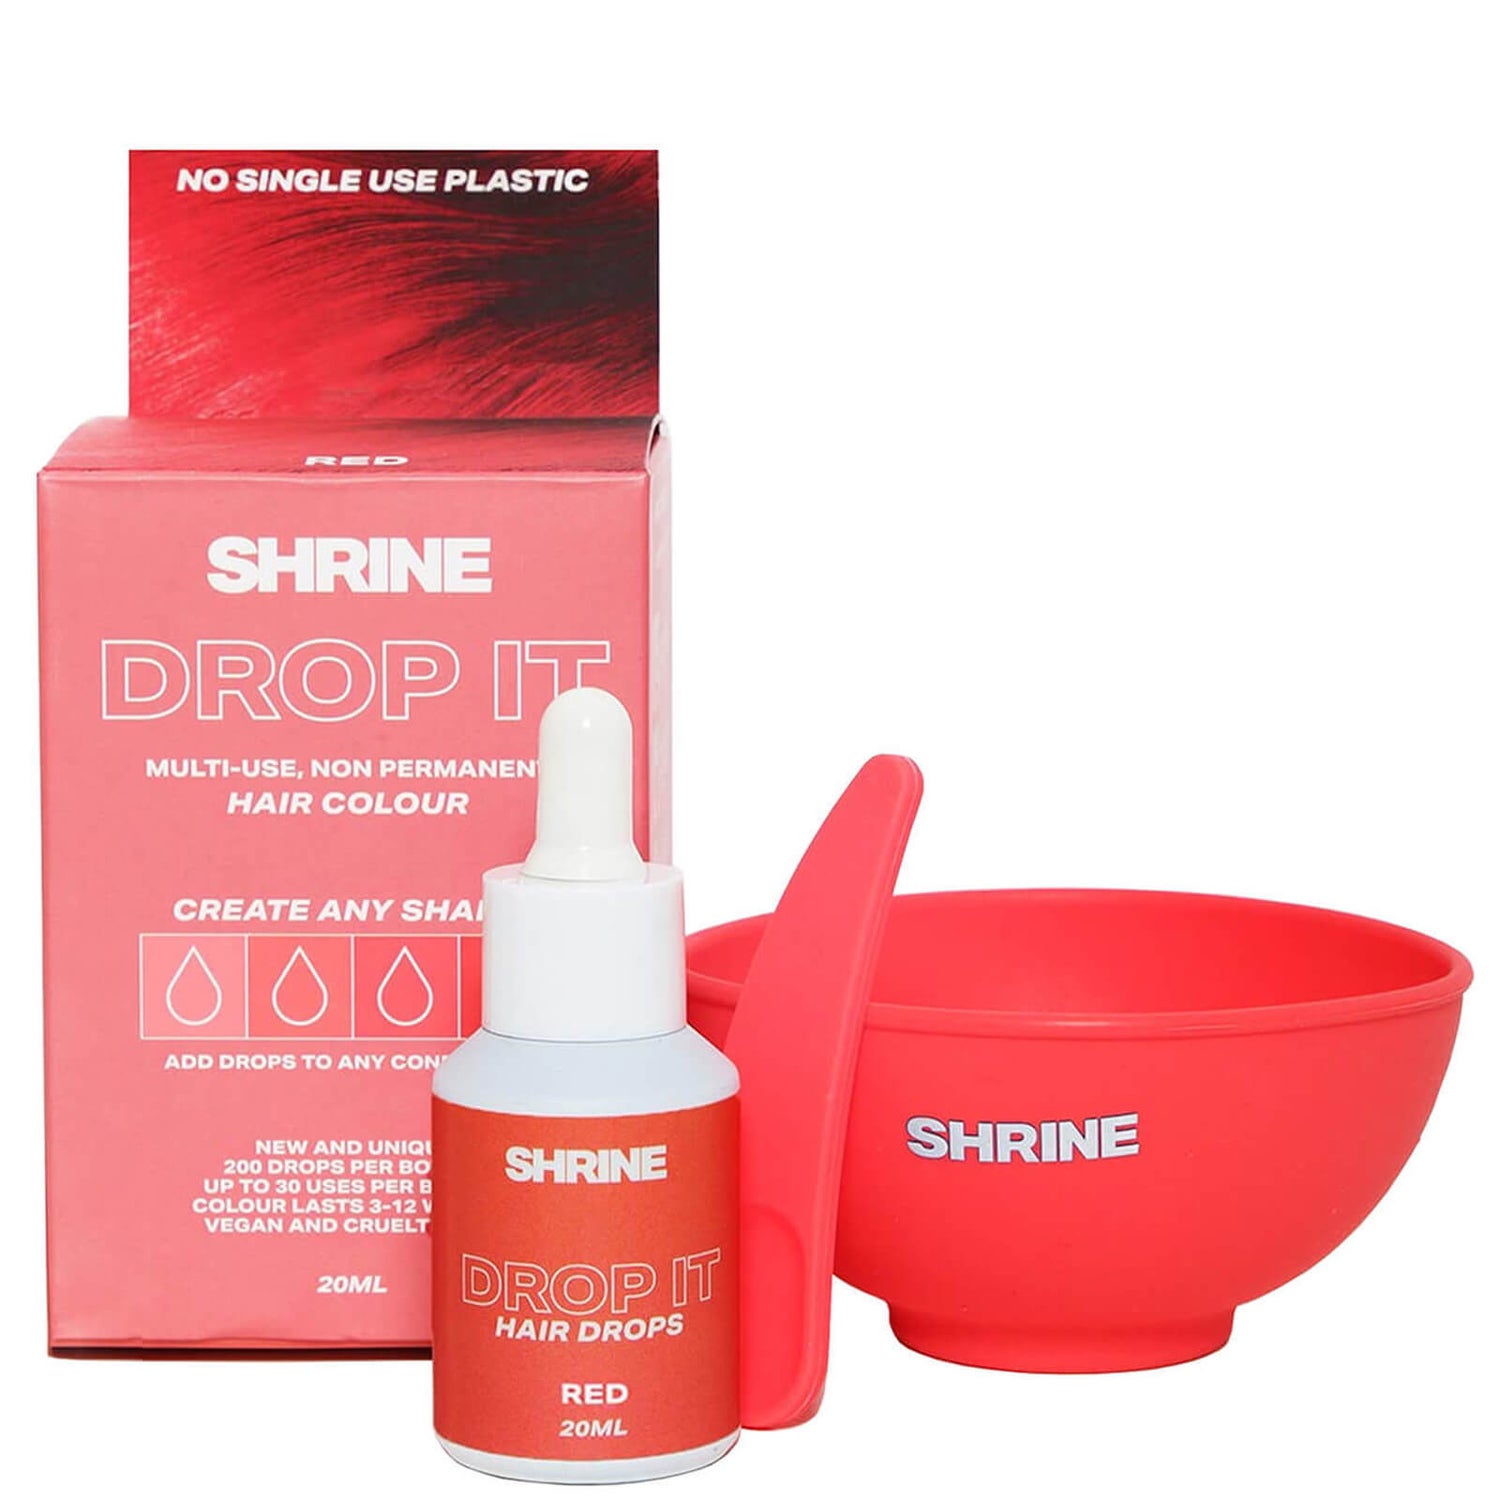 SHRINE Drop It染发剂 - 红色 20ml